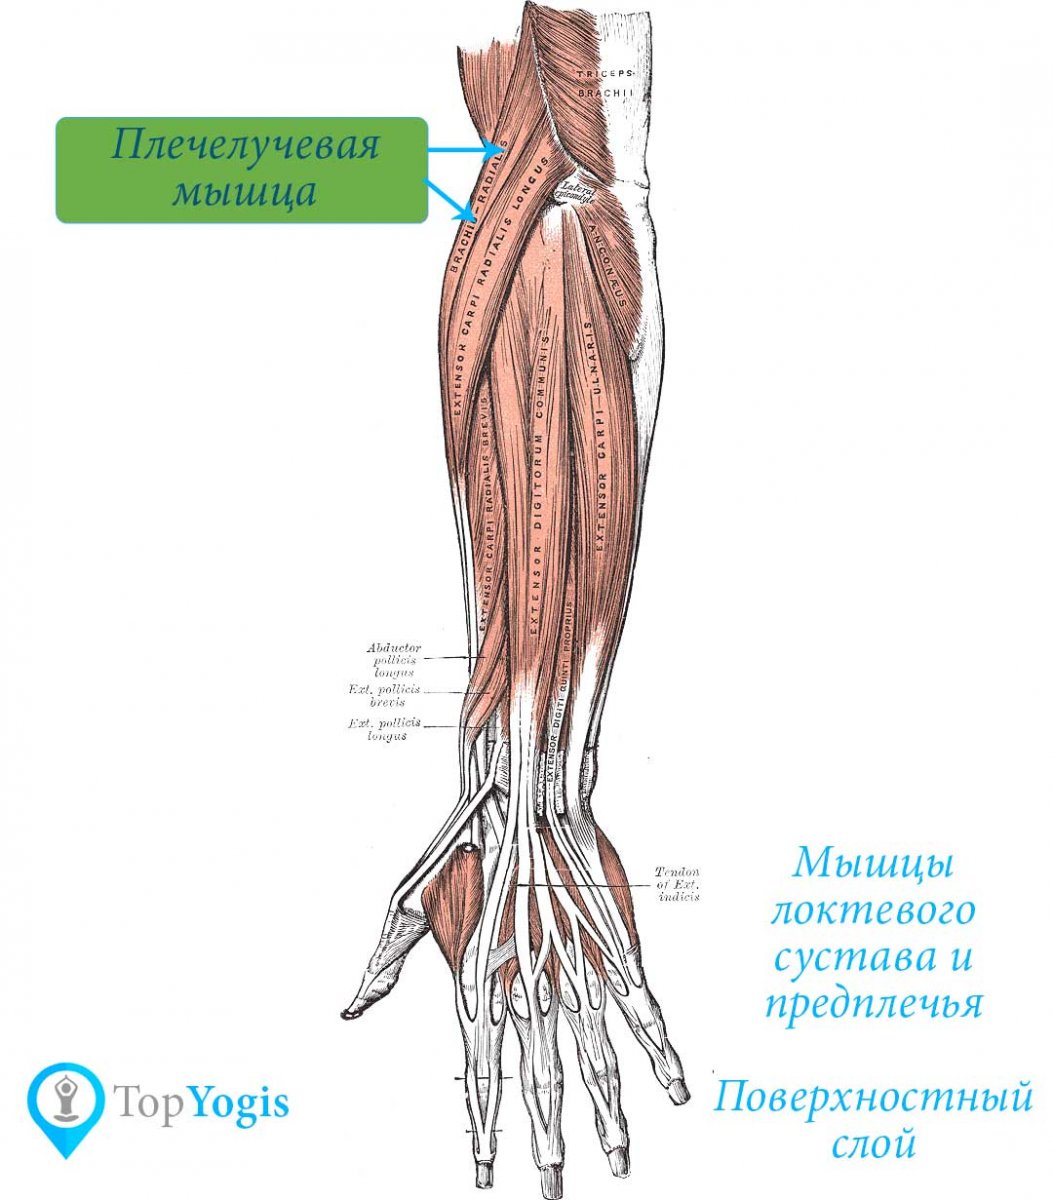 Extensor tendon of the forearm